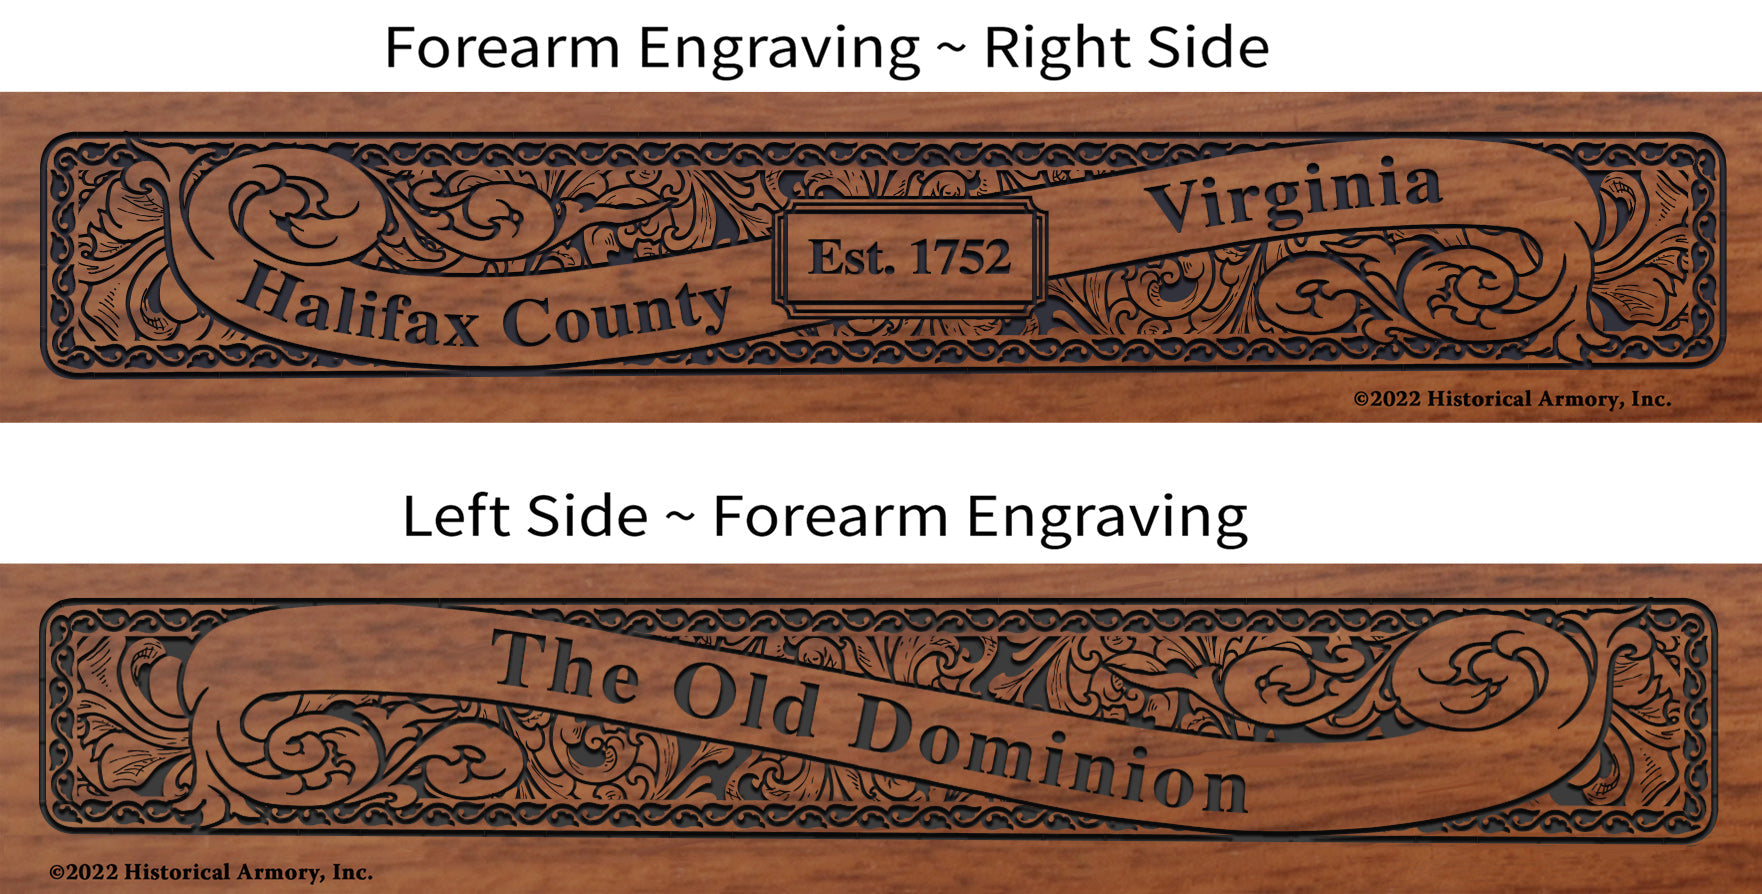 Halifax County Virginia Engraved Rifle Forearm